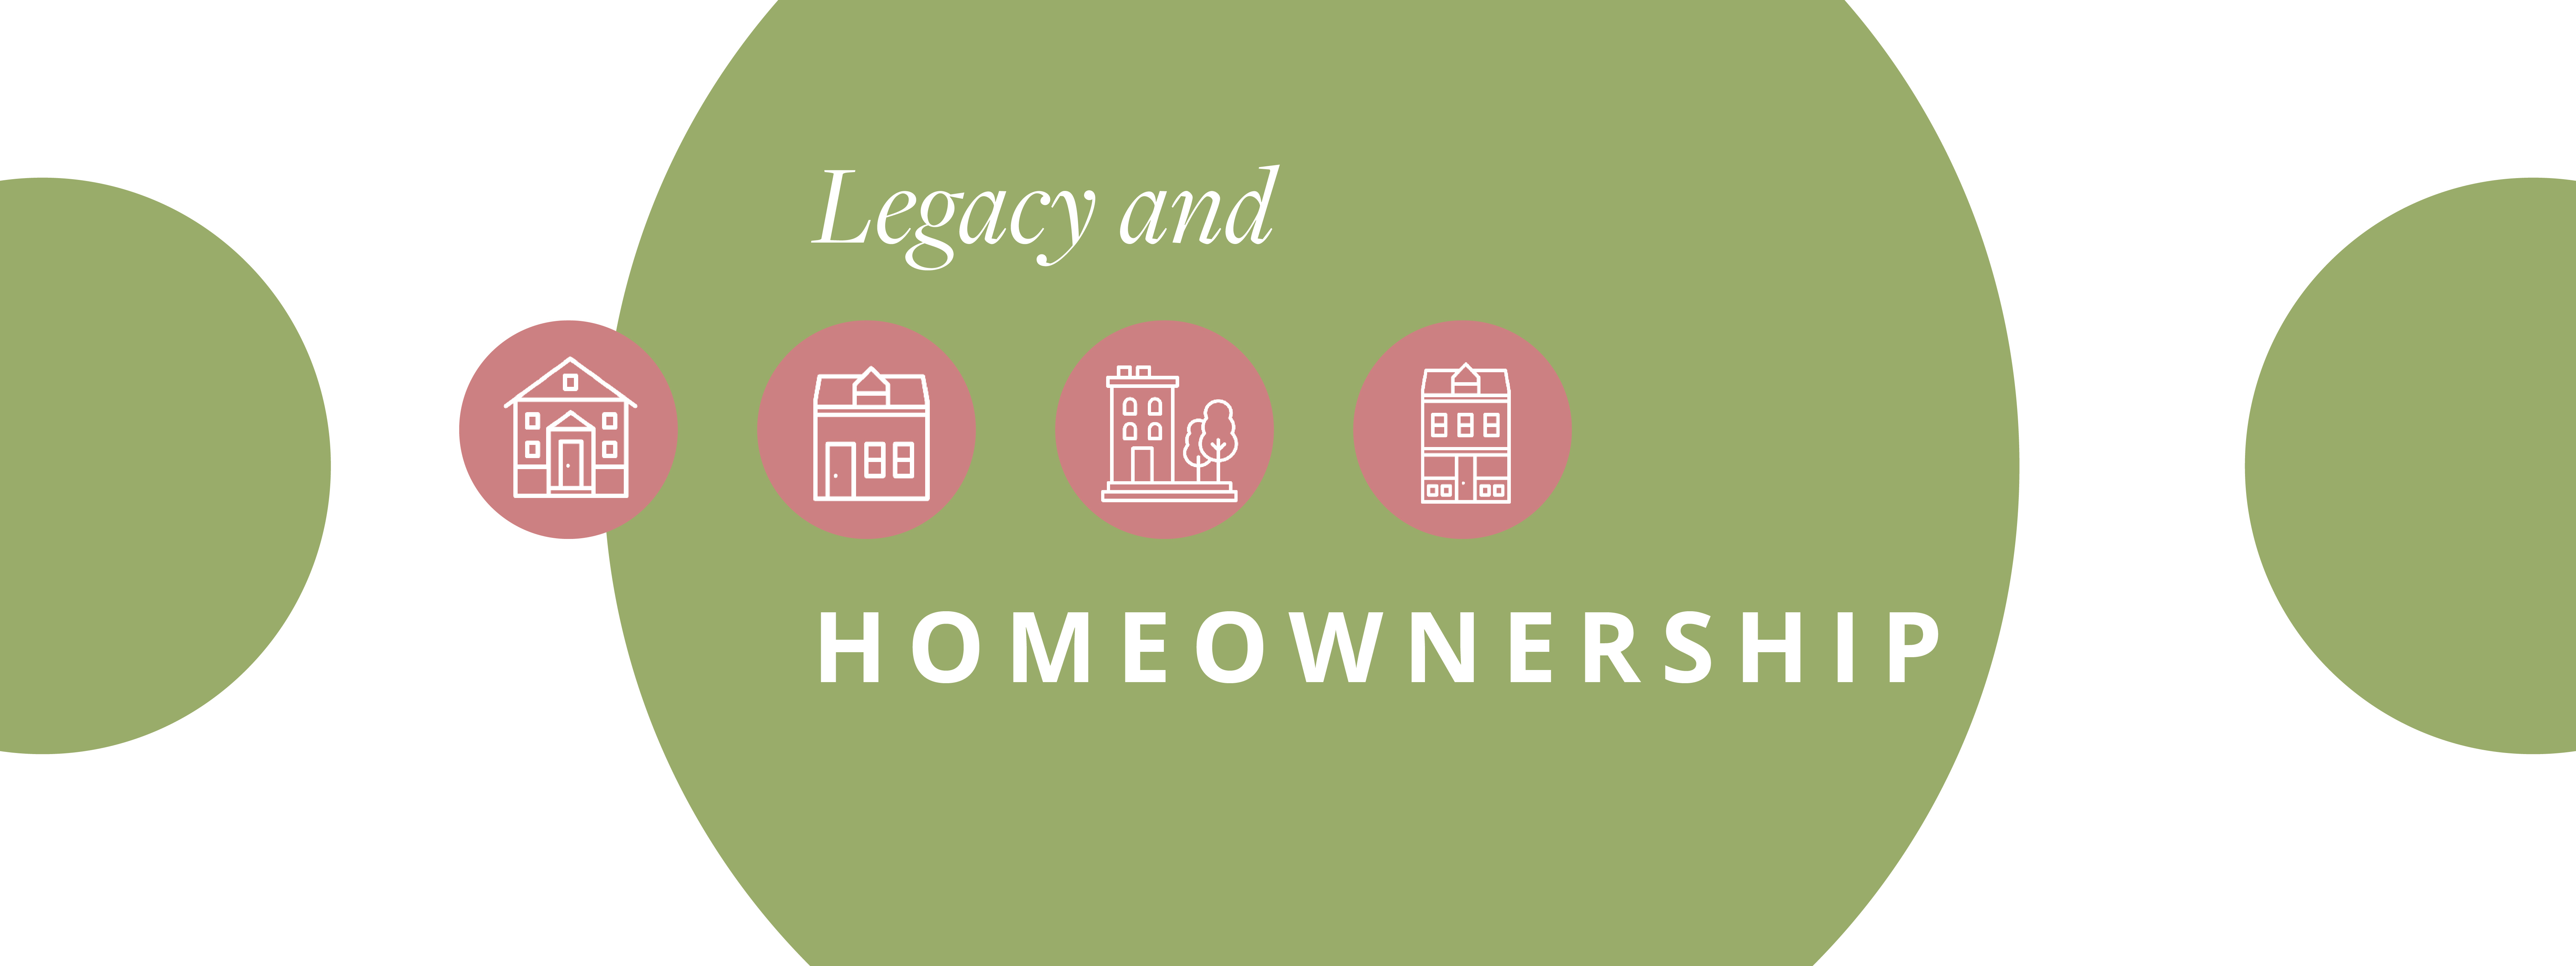 Legacy and Homeownership